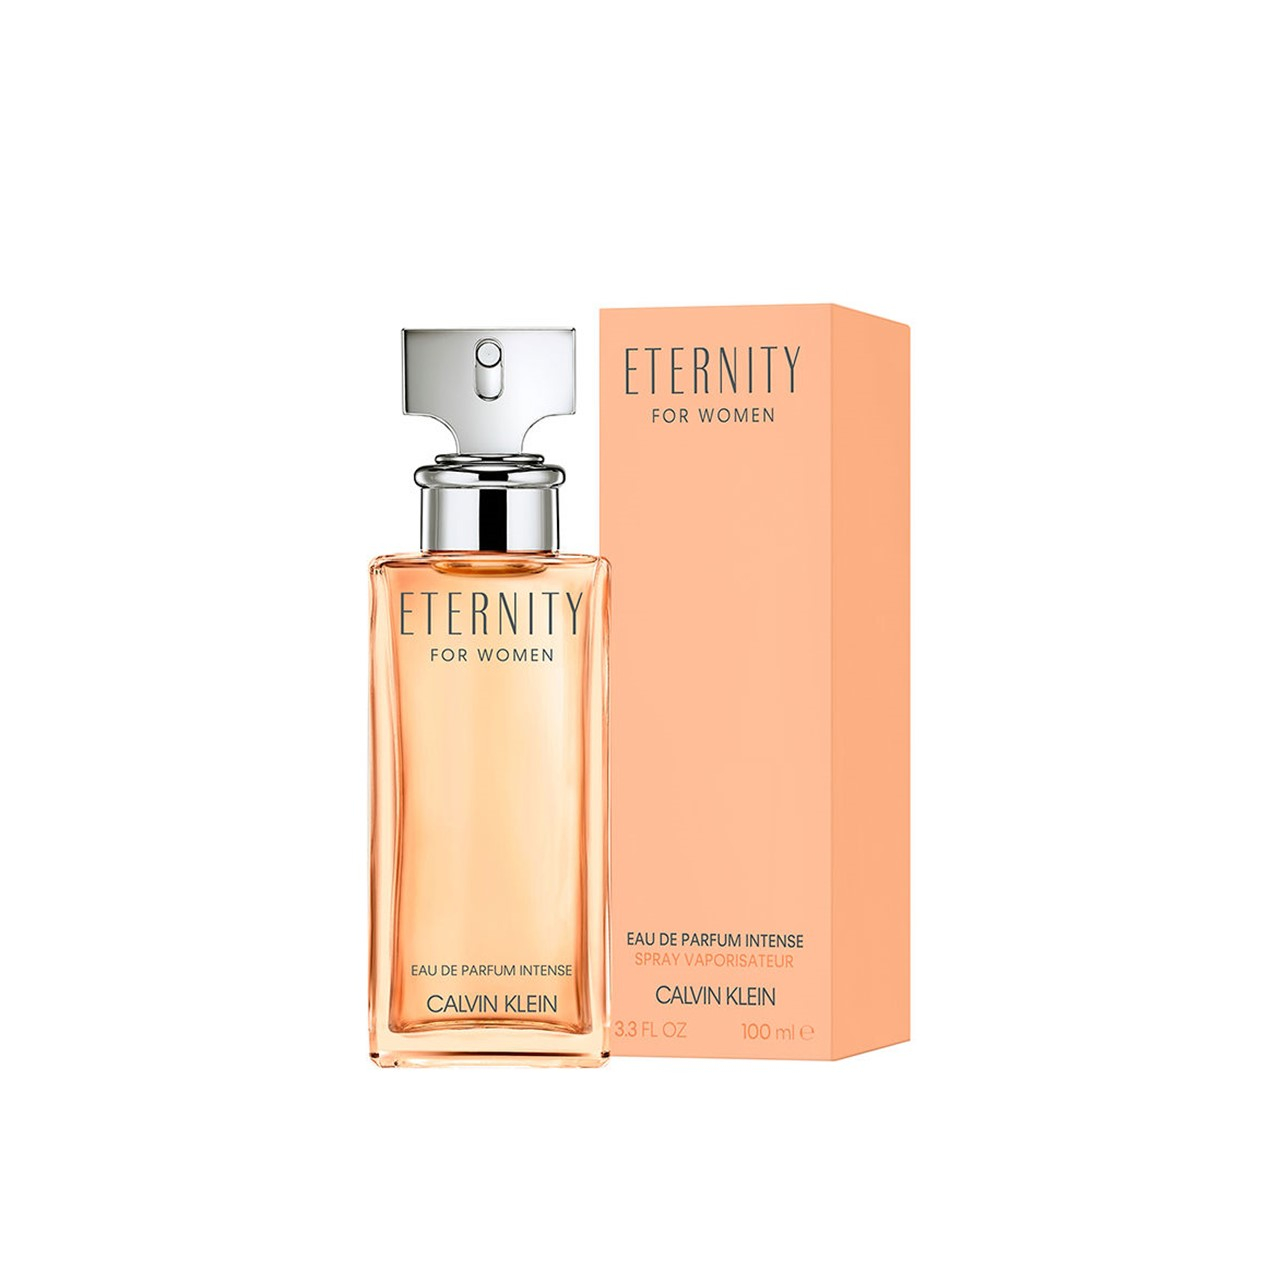 Calvin Klein Eternity For Women Eau de Parfum Intense 100ml (3.3 fl oz)